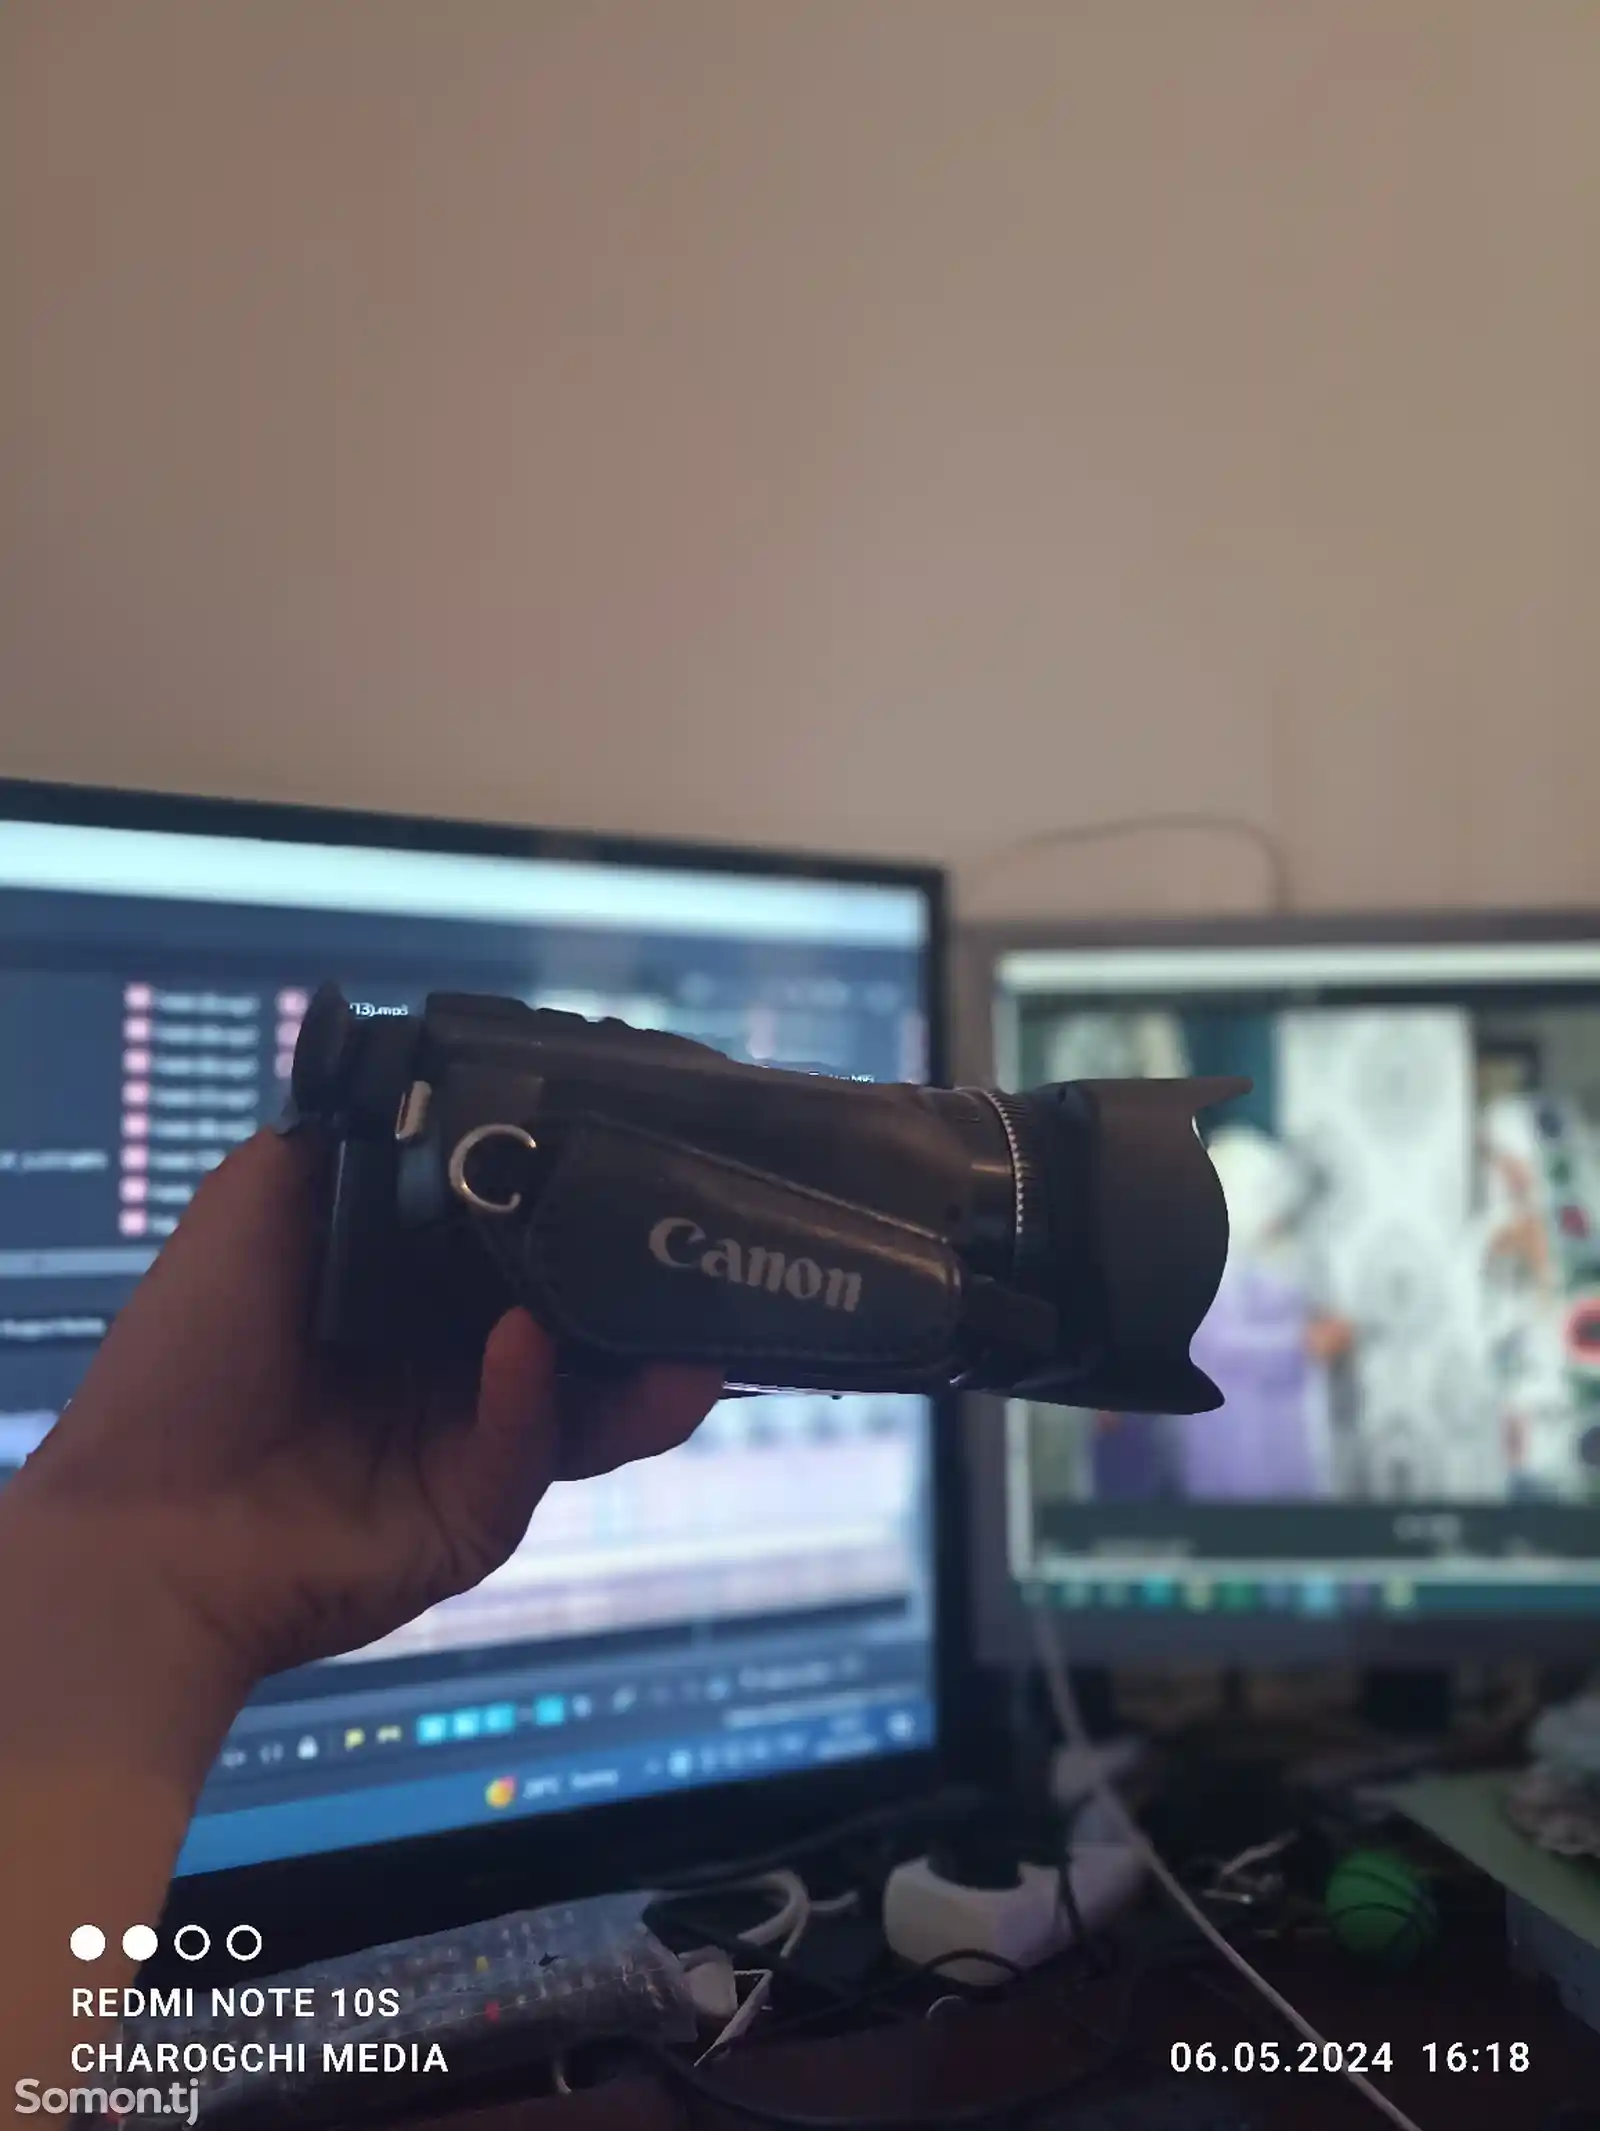 Видеокамера canon g25-2